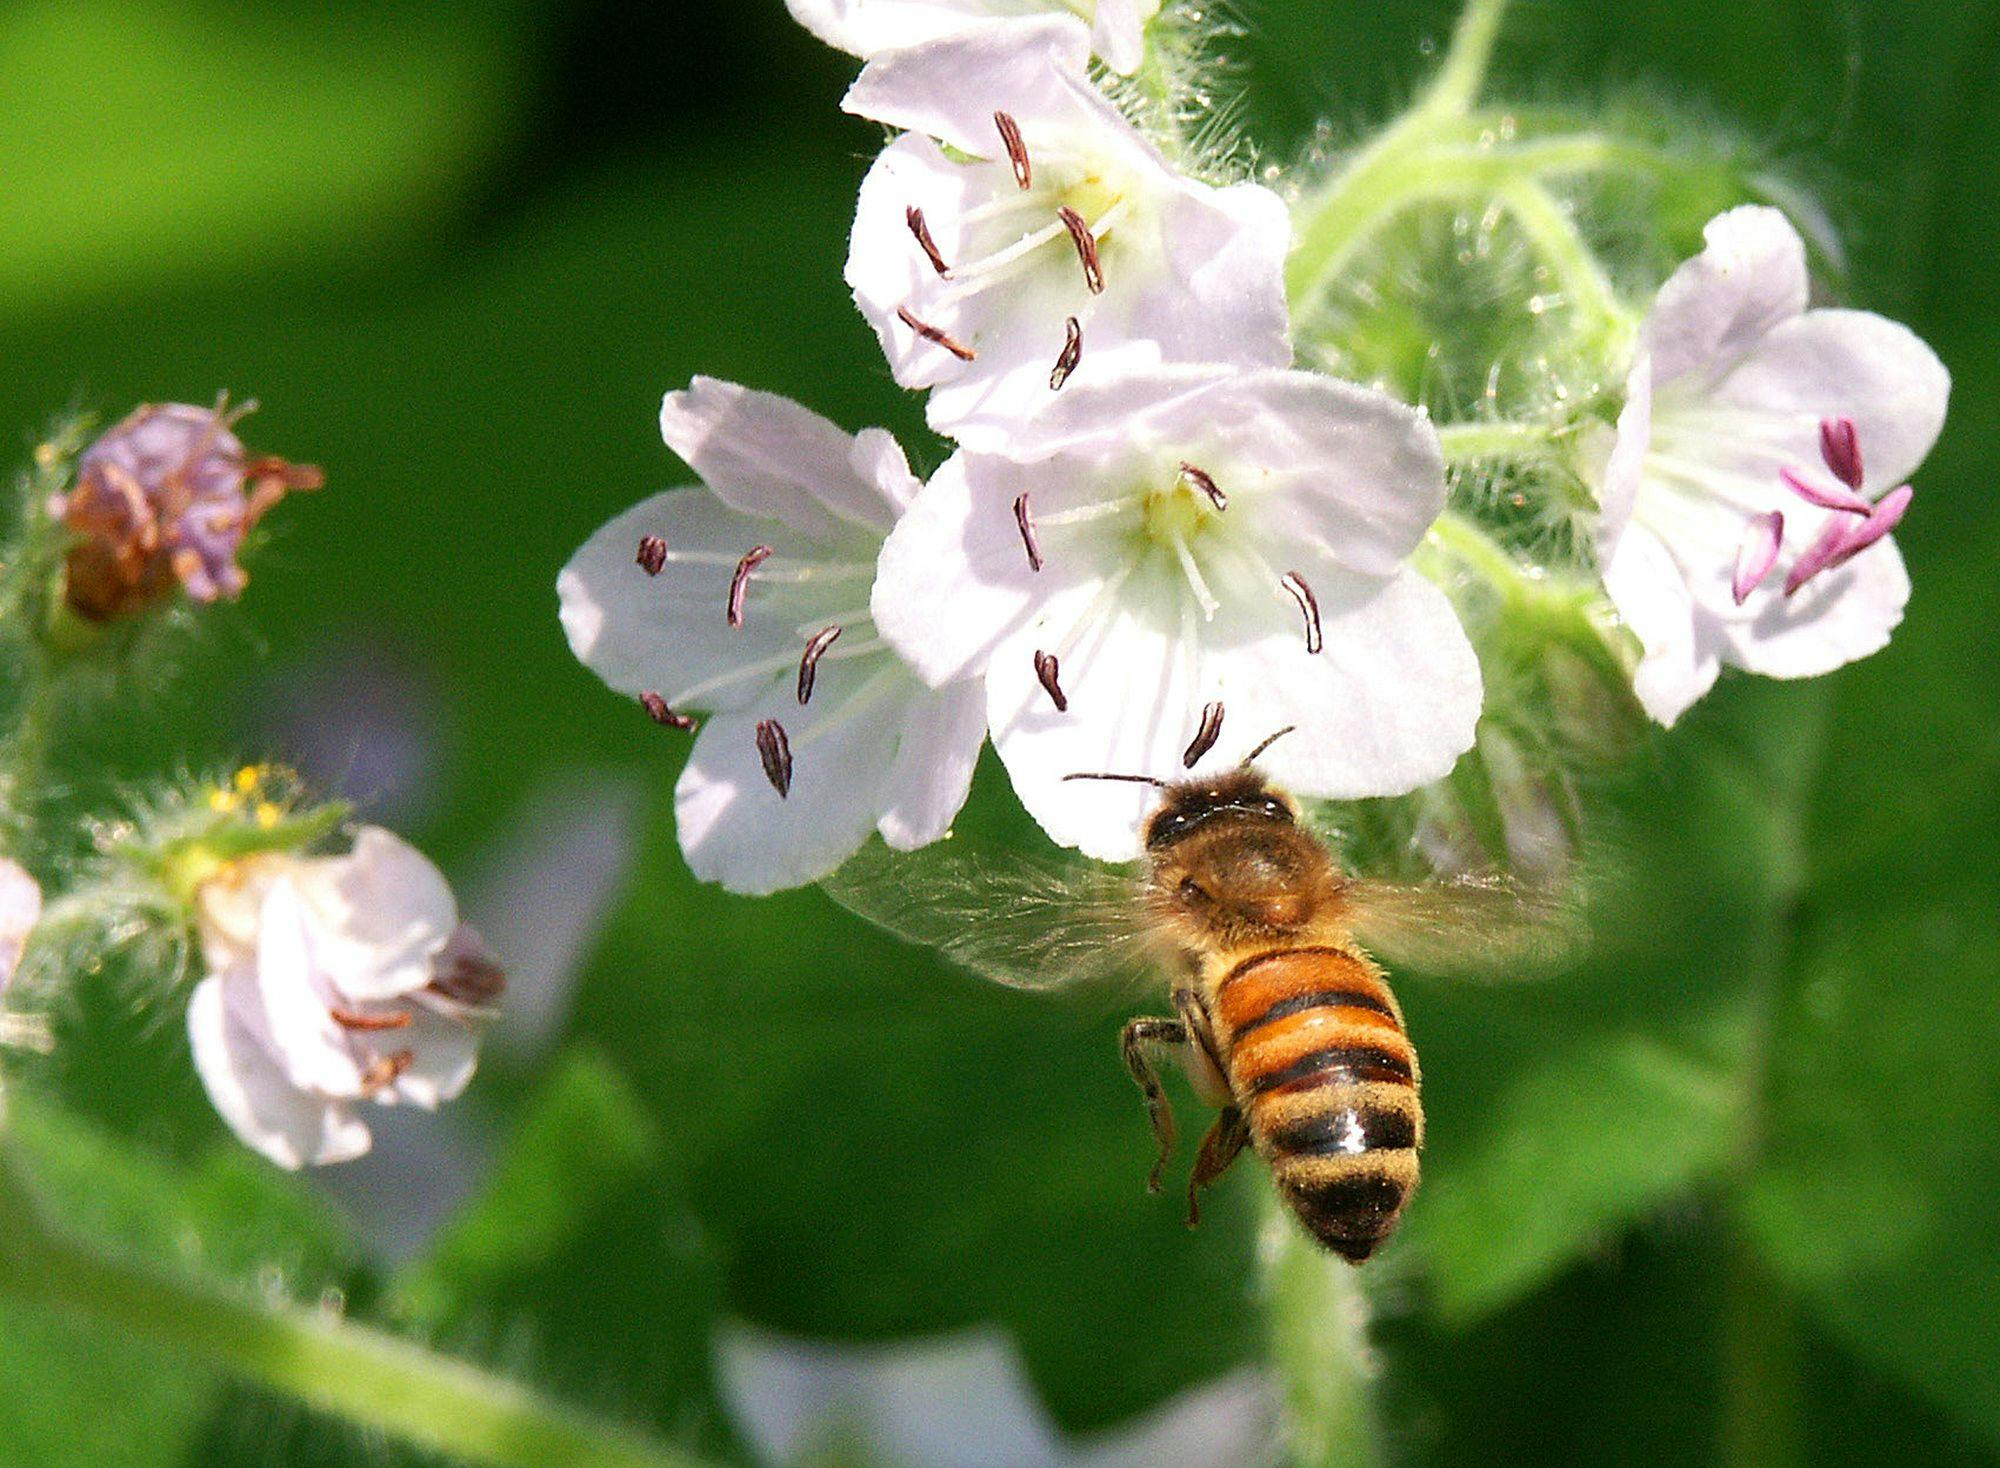 USDA honors National Pollinator Week